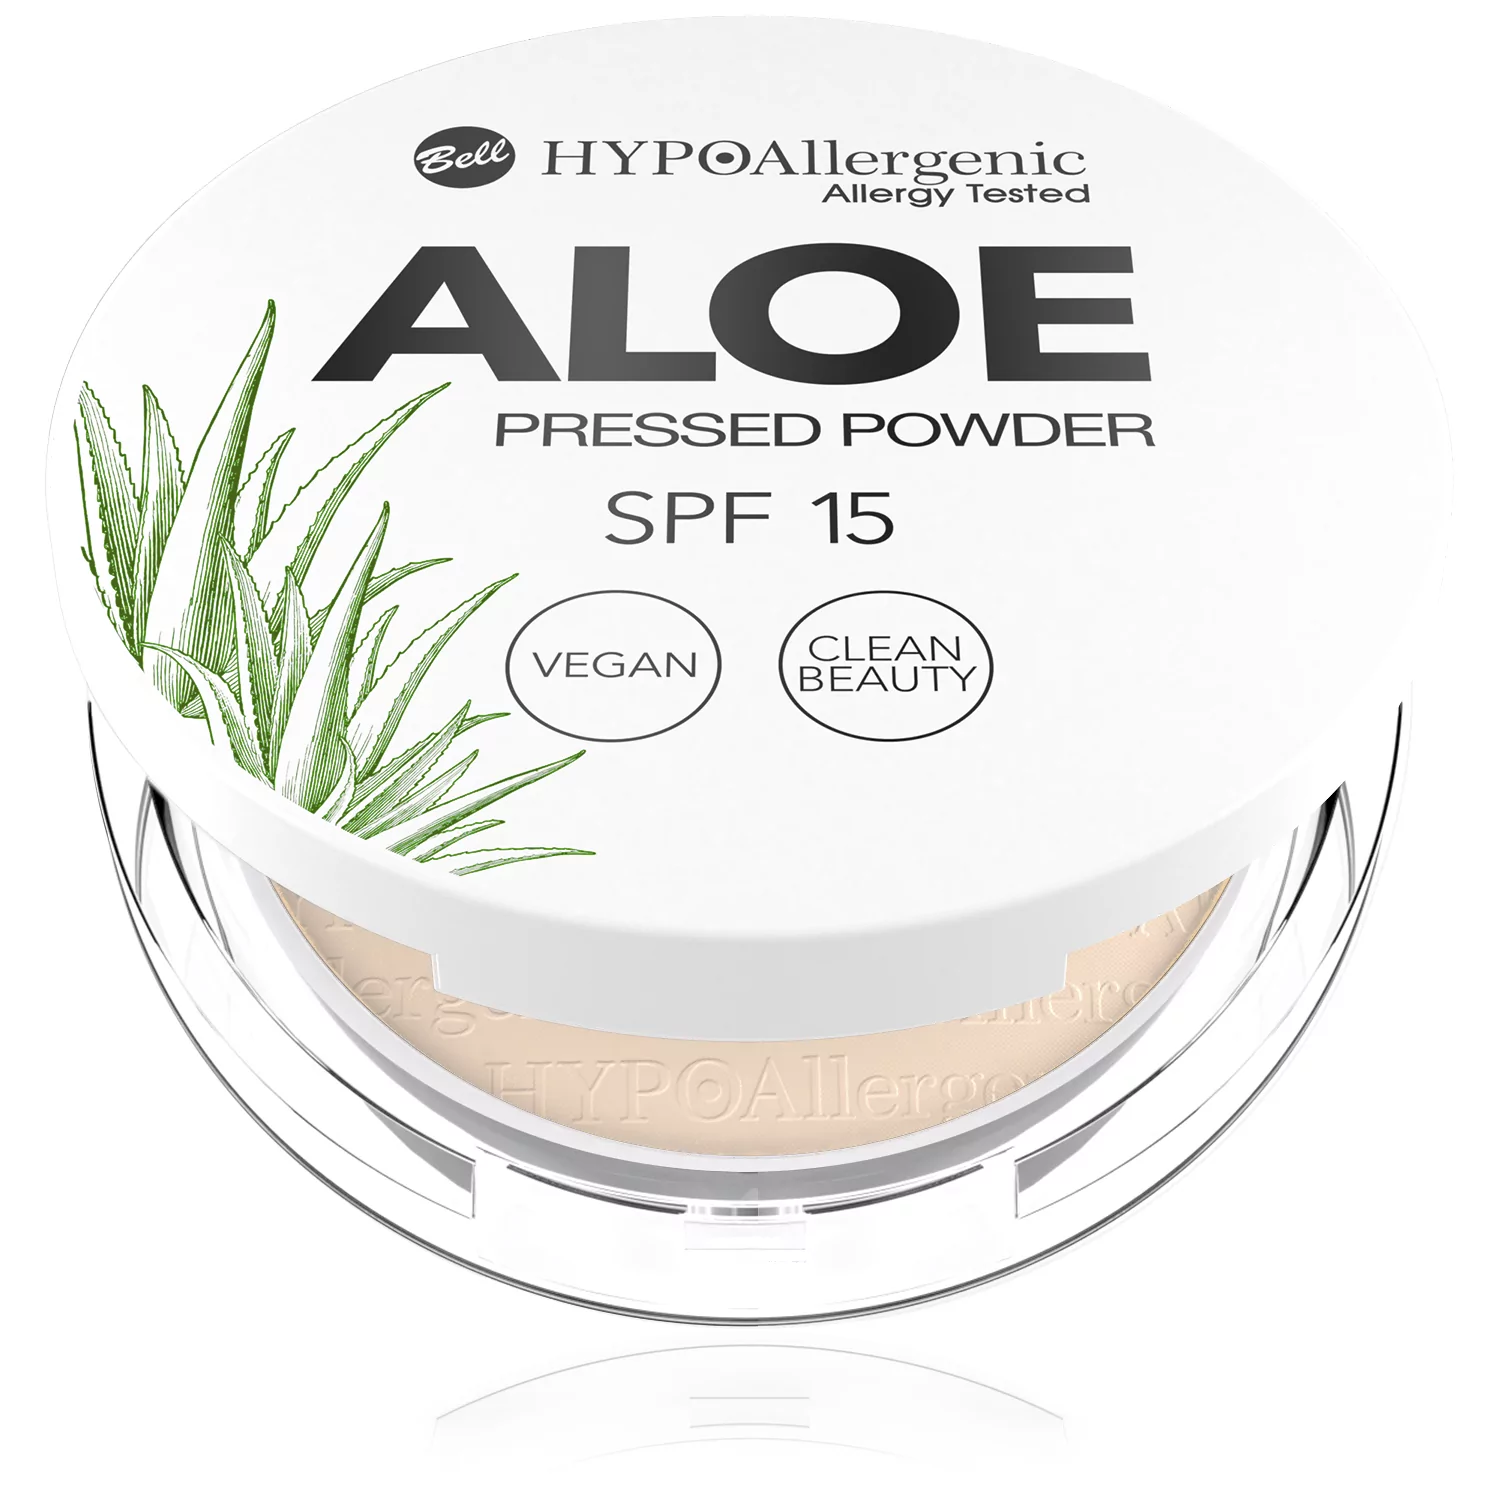 Bell HYPO Aloe Pressed Powder SPF 15, puder matująco-ochronny do twarzy, 04, 5g